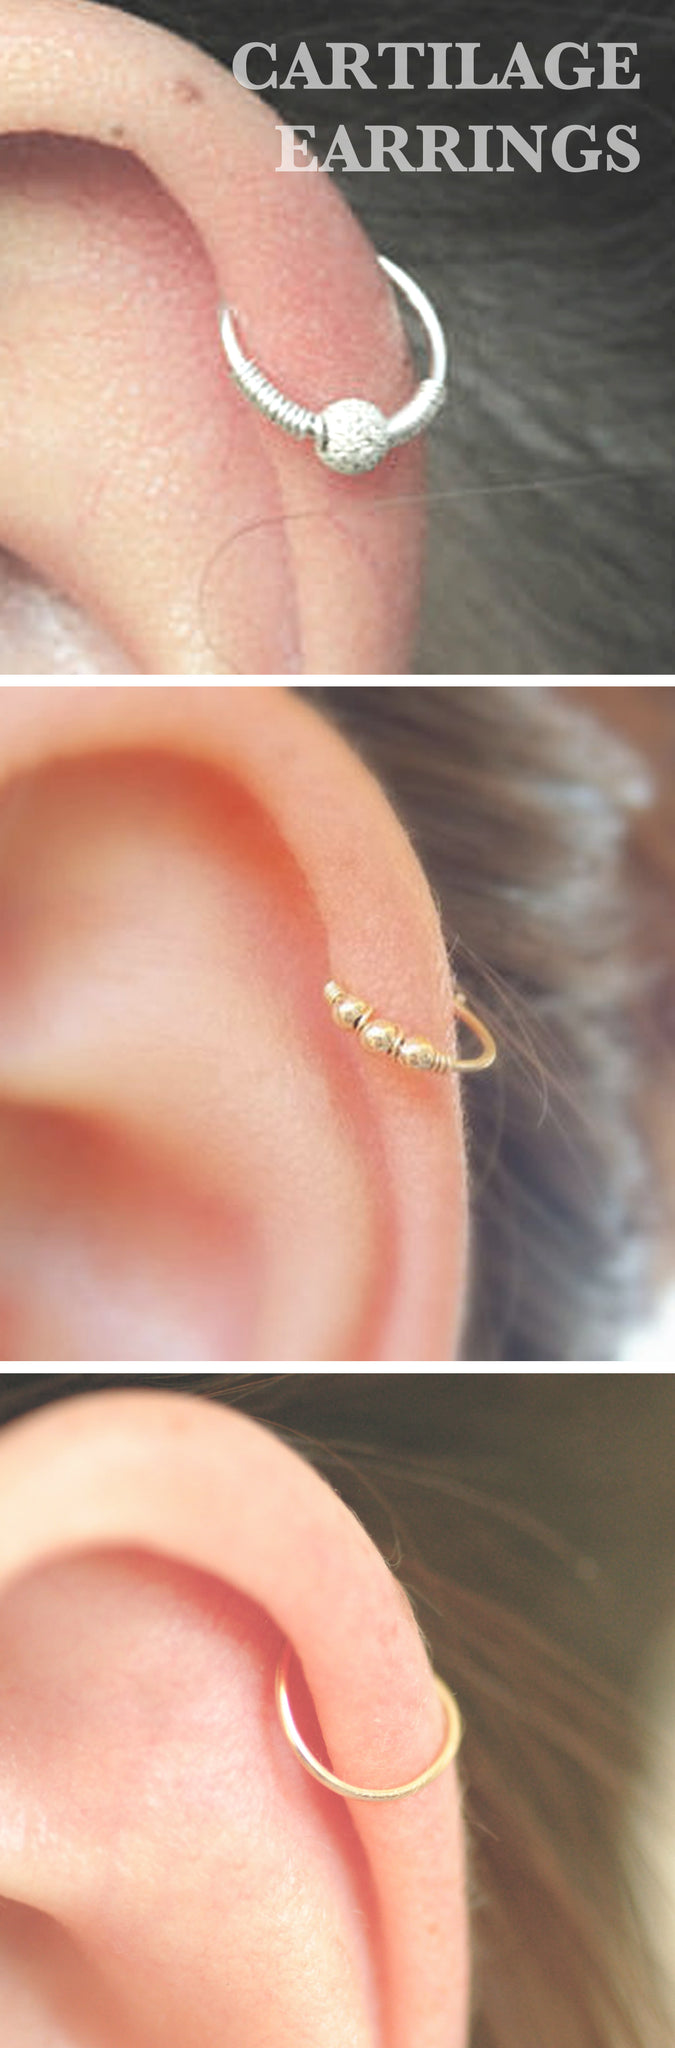 Minimalistic Cartilage Ear Piercing Ideas - Boho Helix Earring Gold Ring Hoop Silver 16G - www.MyBodiArt.com 